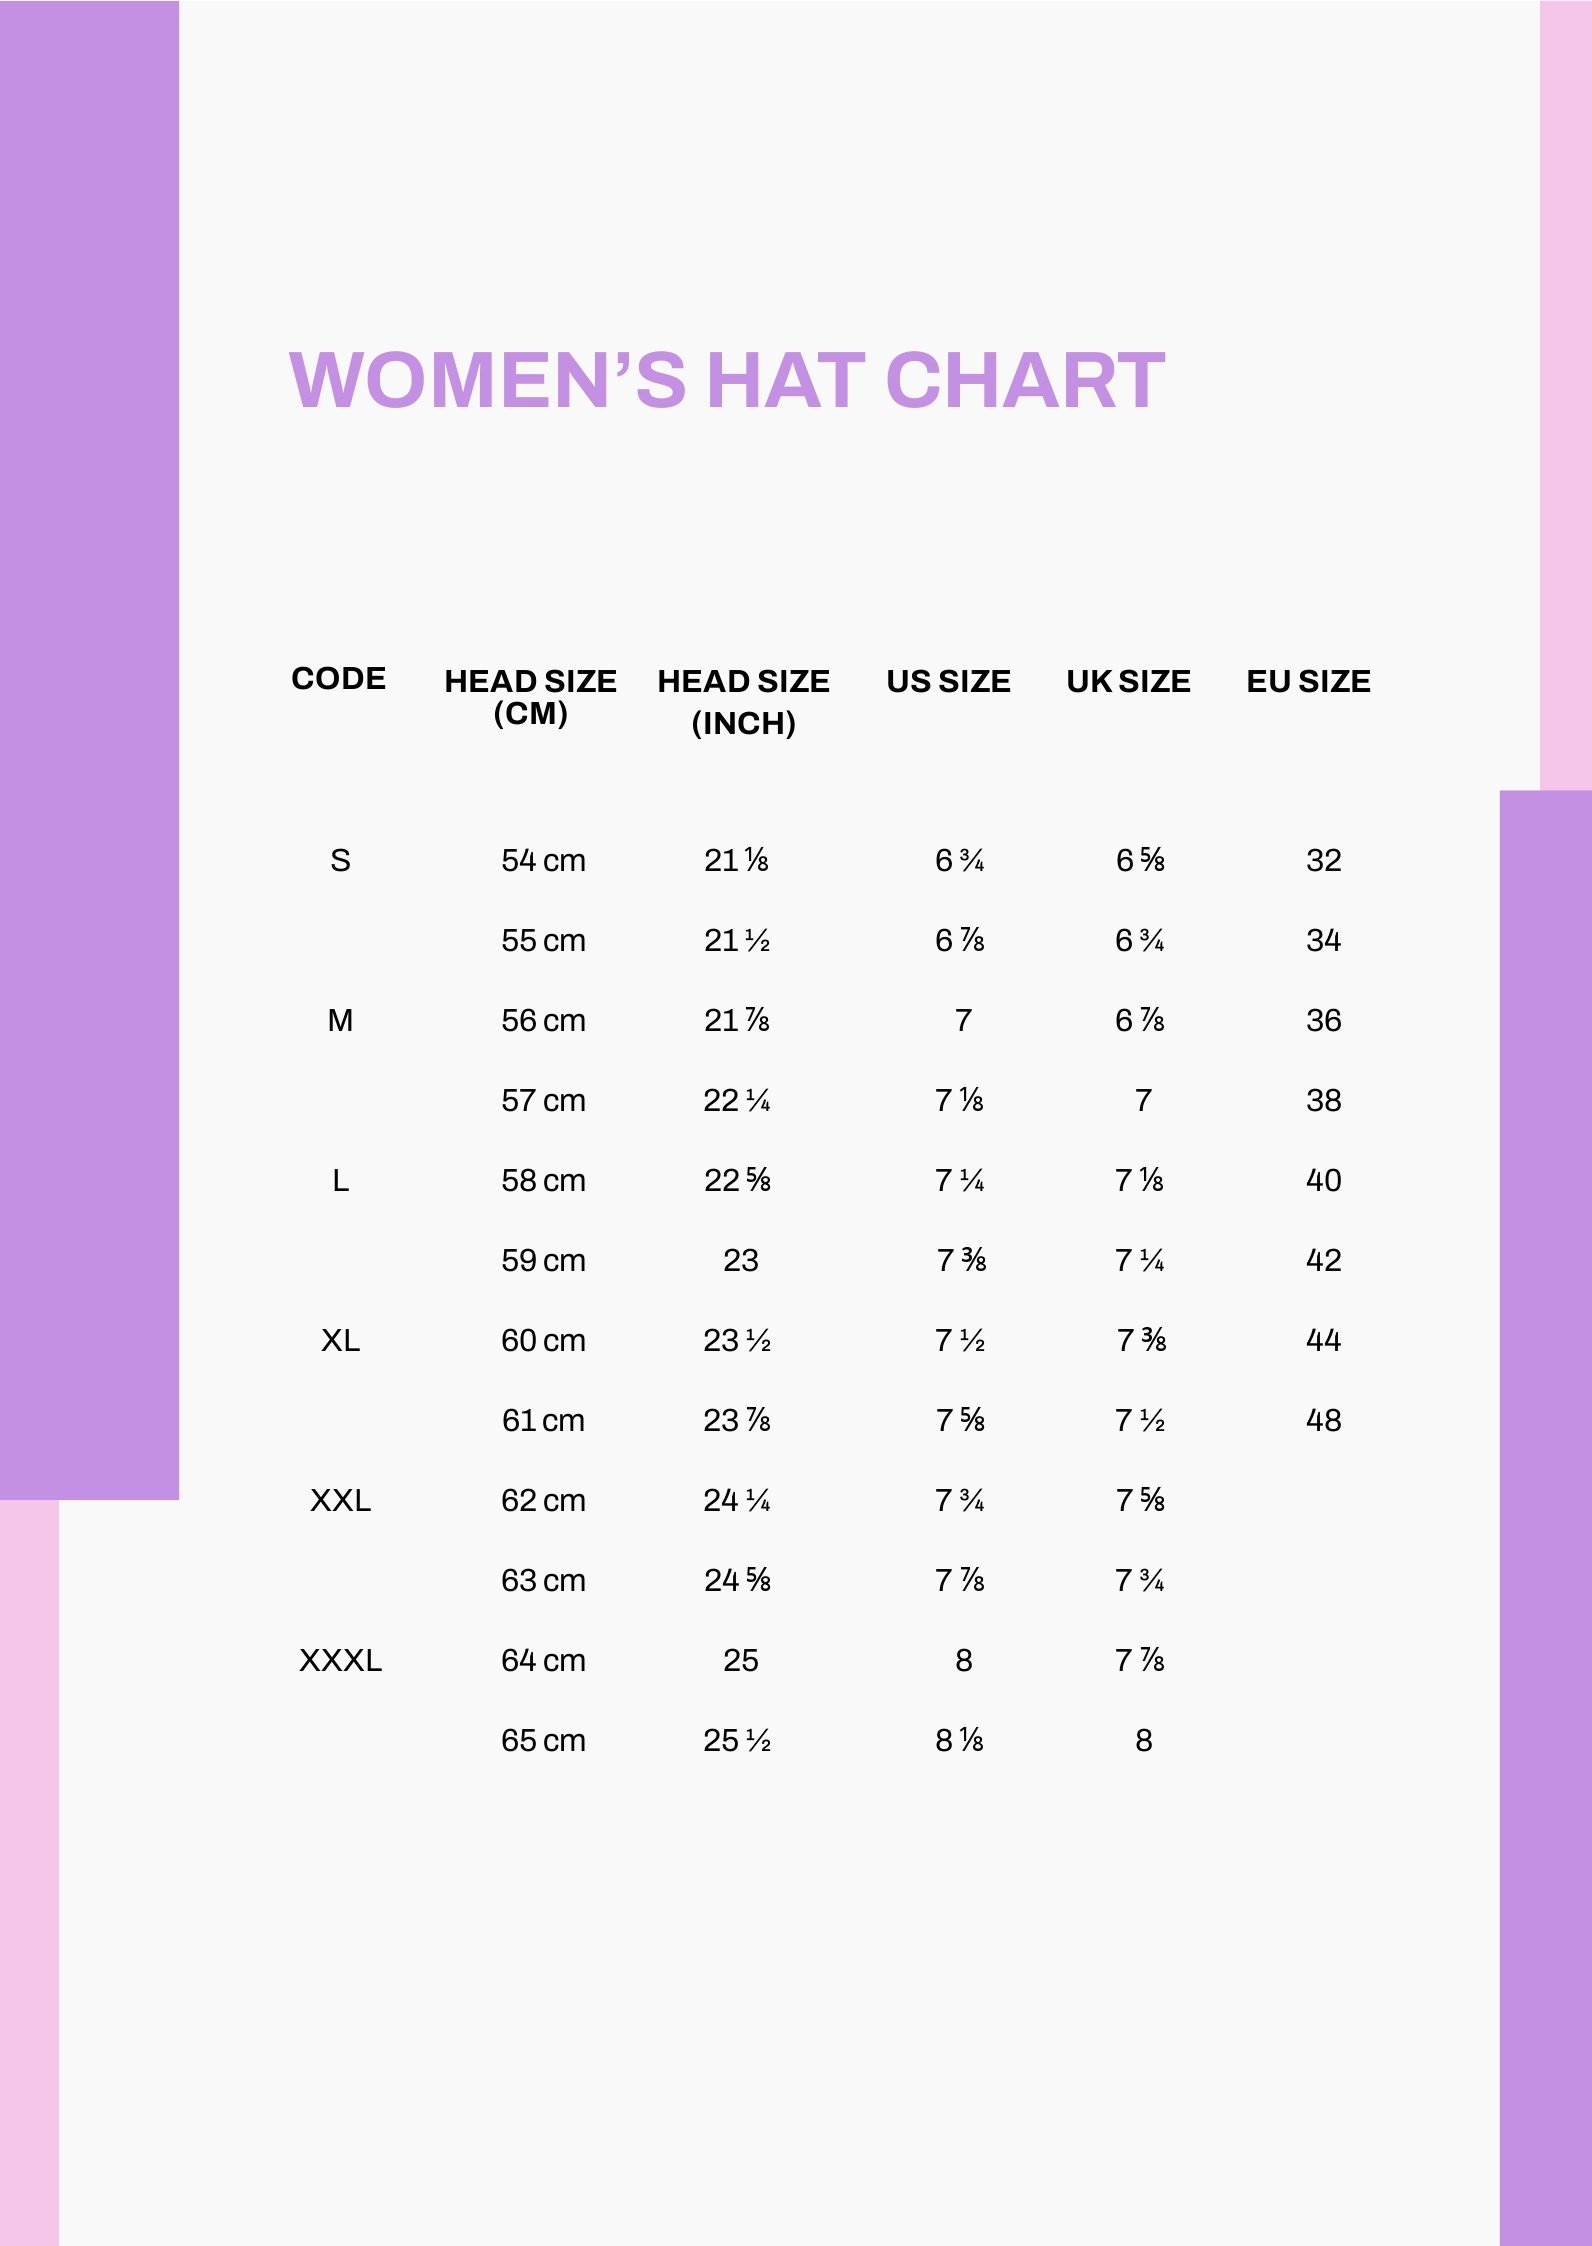 Free Women's Hat Size Chart - Download in PDF